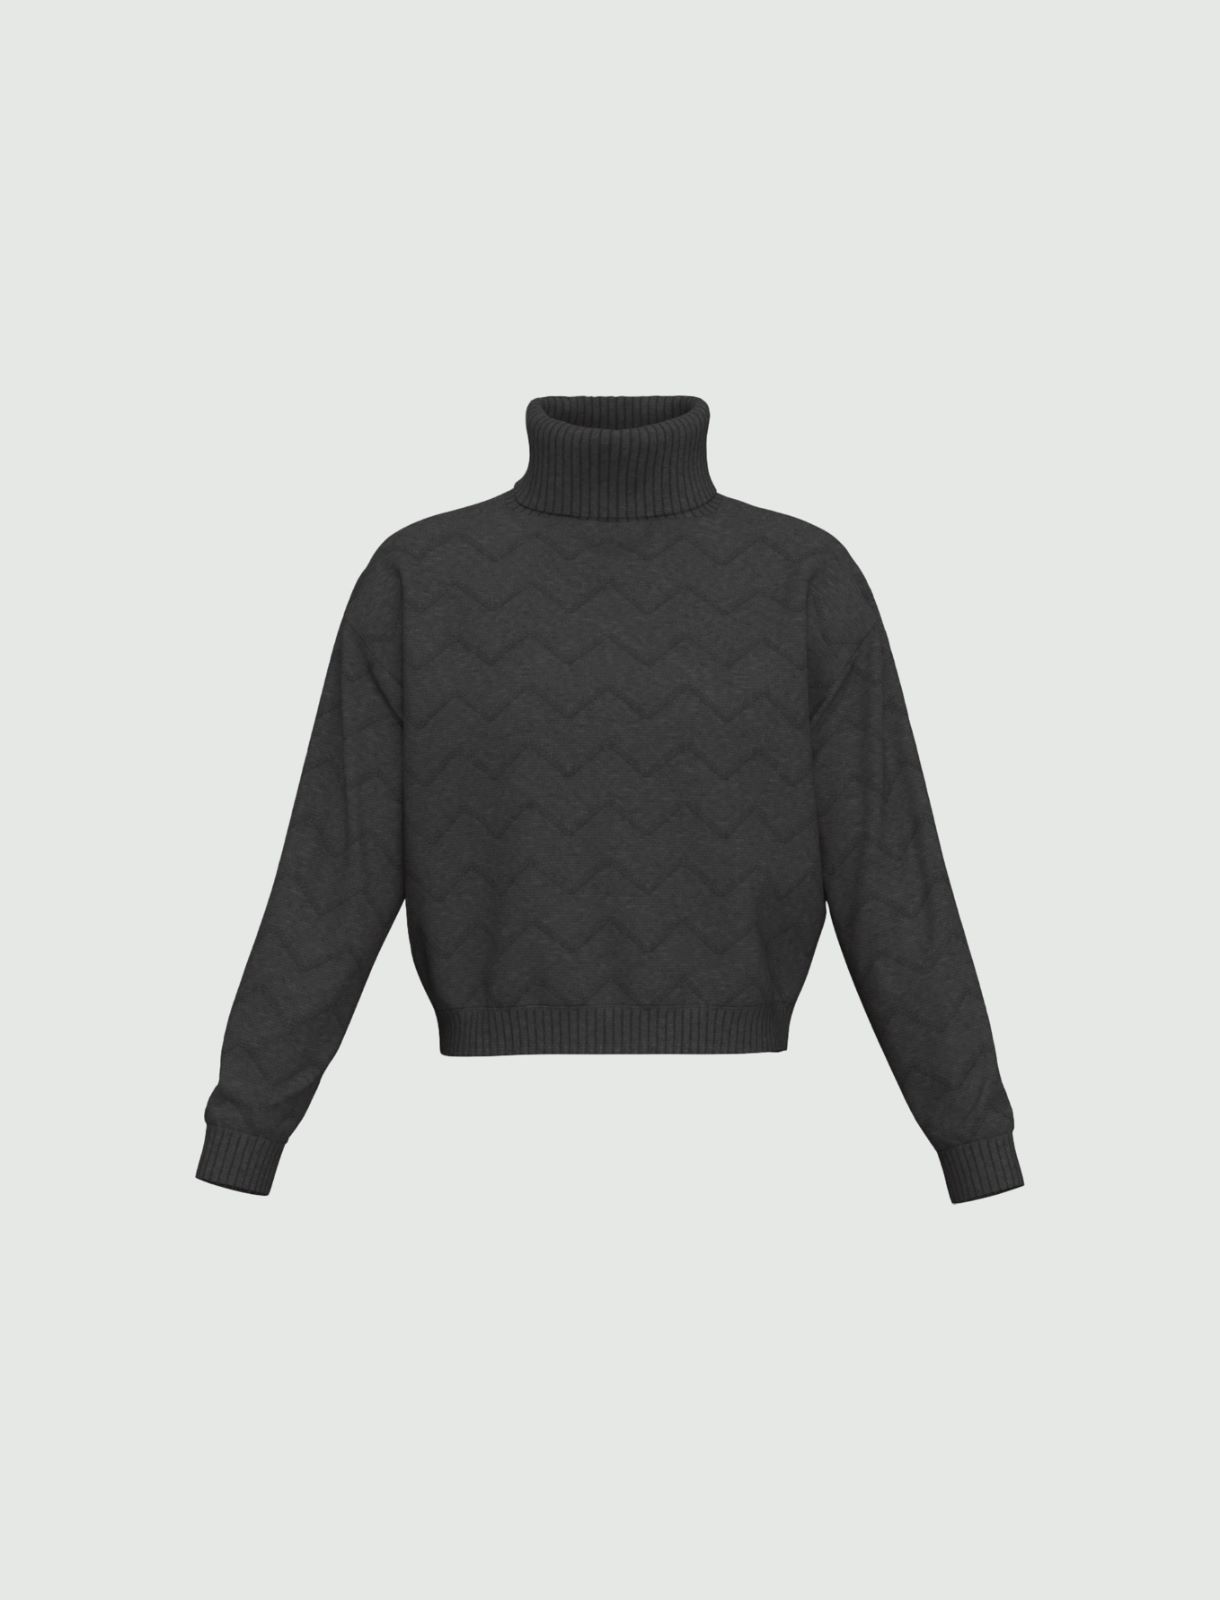 Cropped sweater, medium grey | Marella